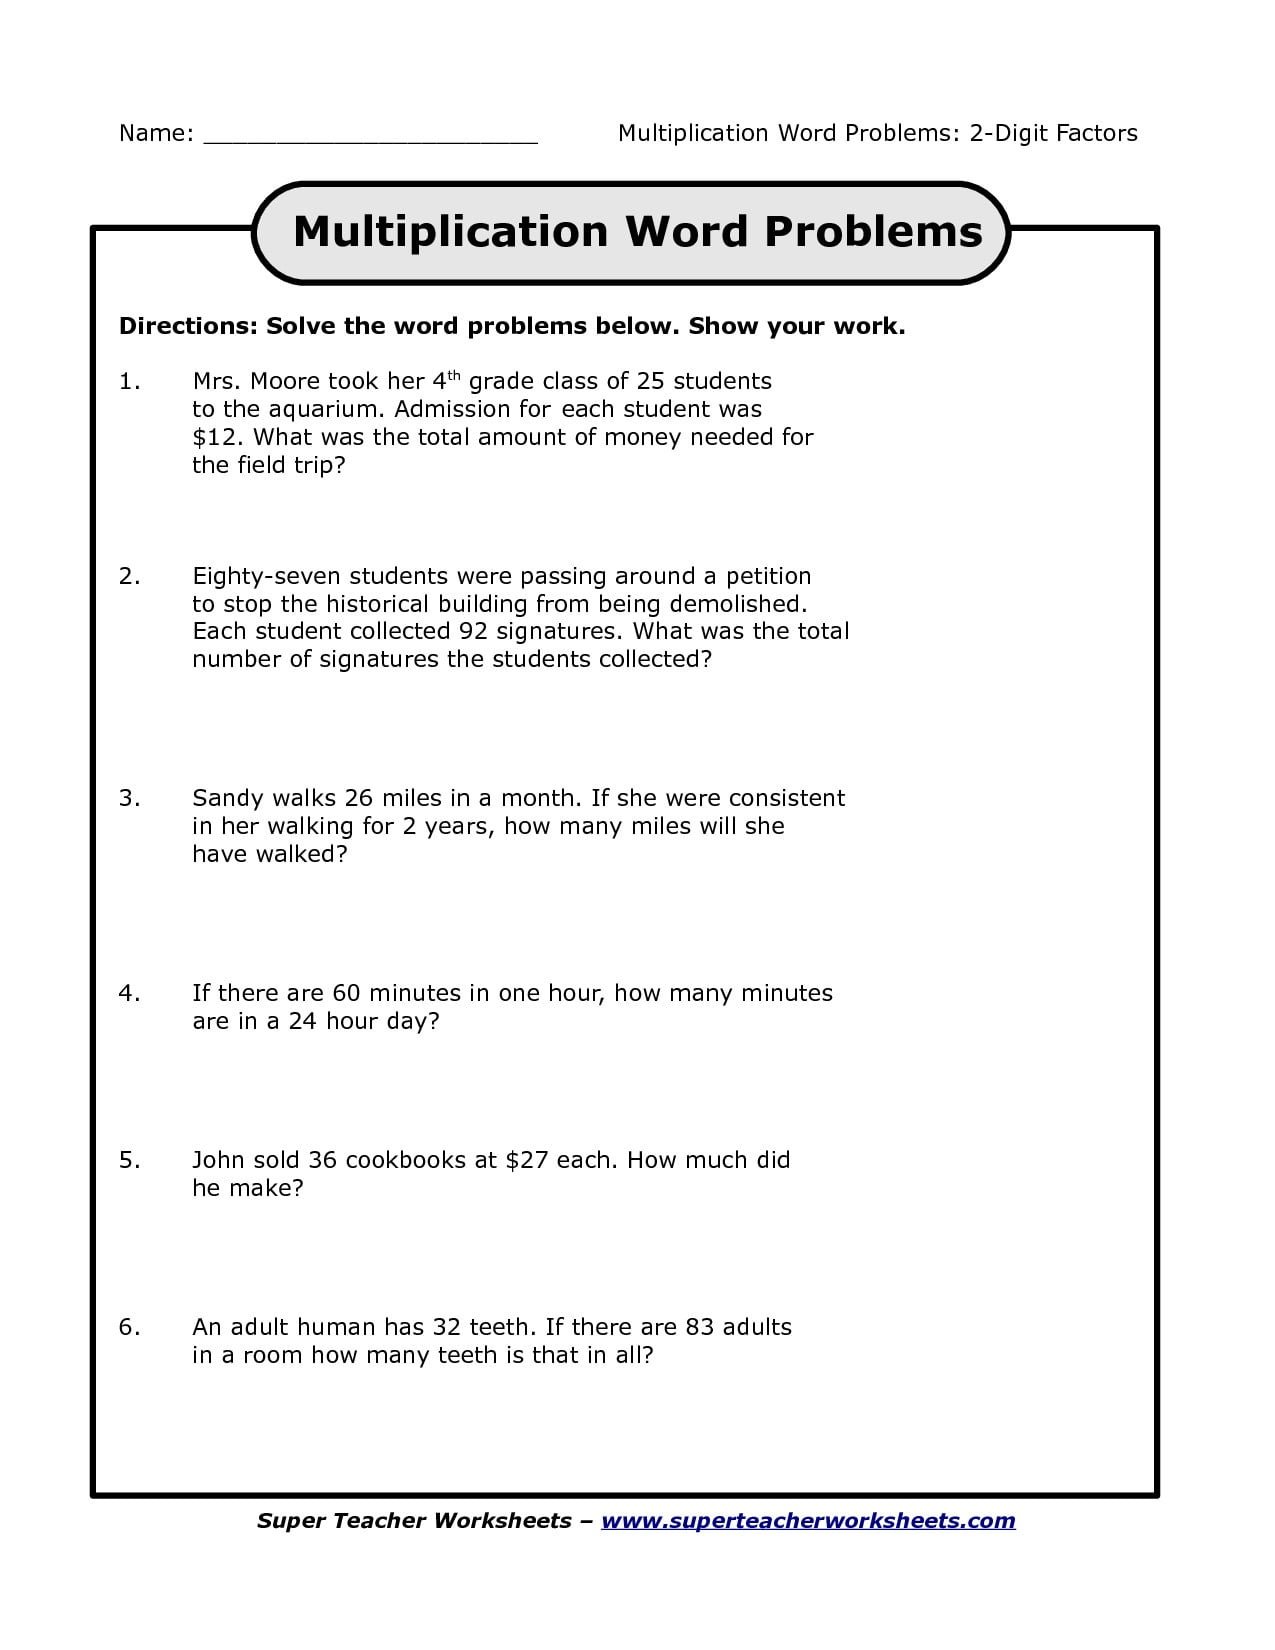 2-digit-by-1-digit-multiplication-word-problems-worksheets-worksheetscity